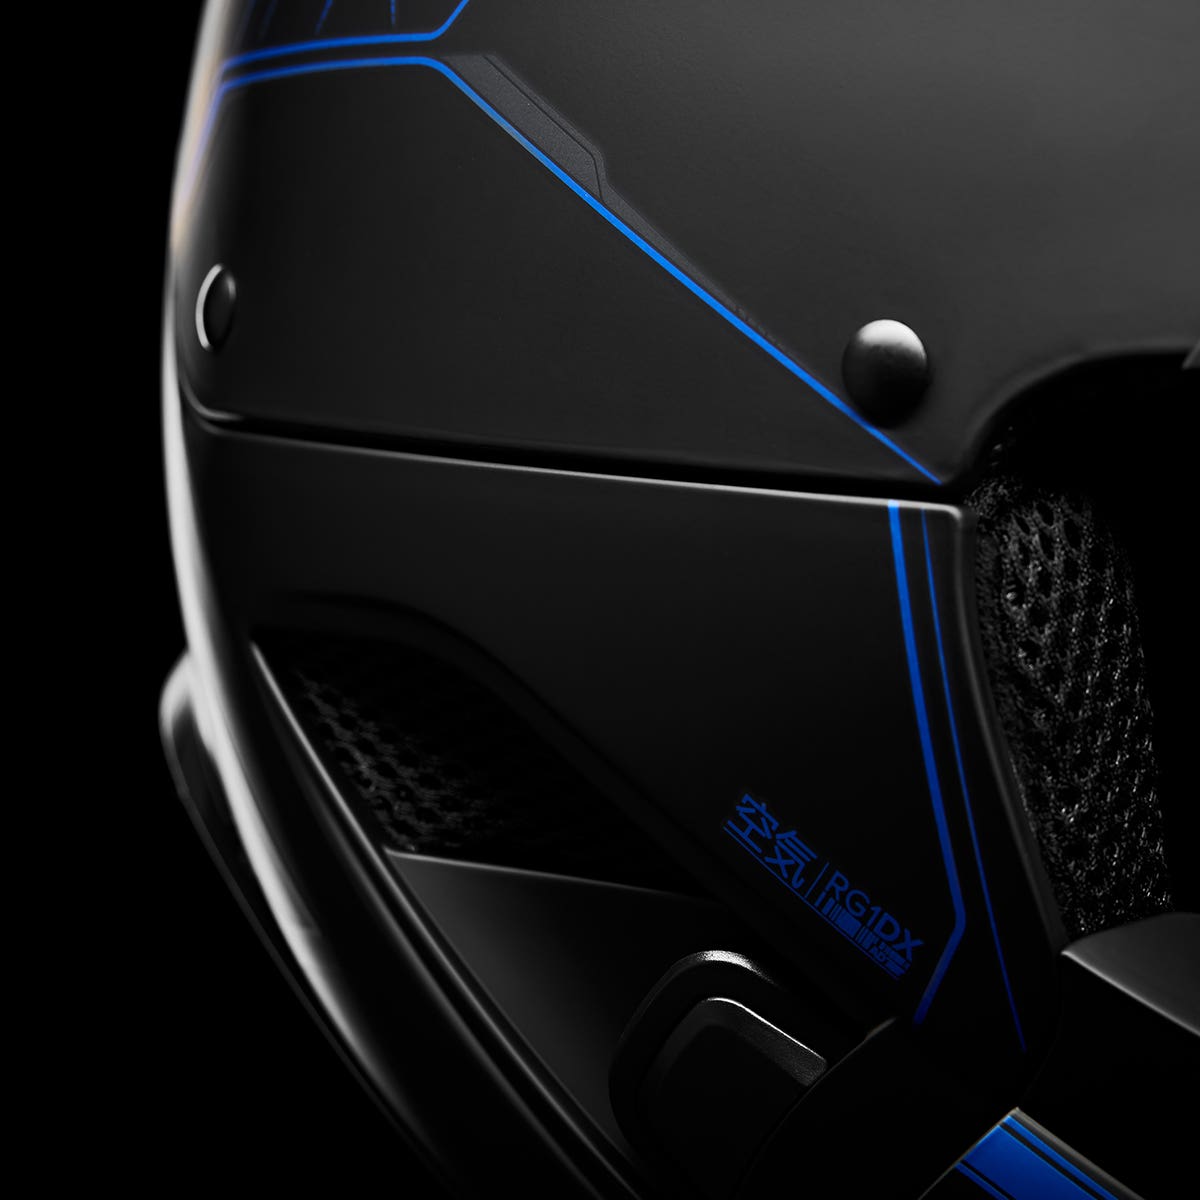 RG1-DX Helmet - Ice 21/22 